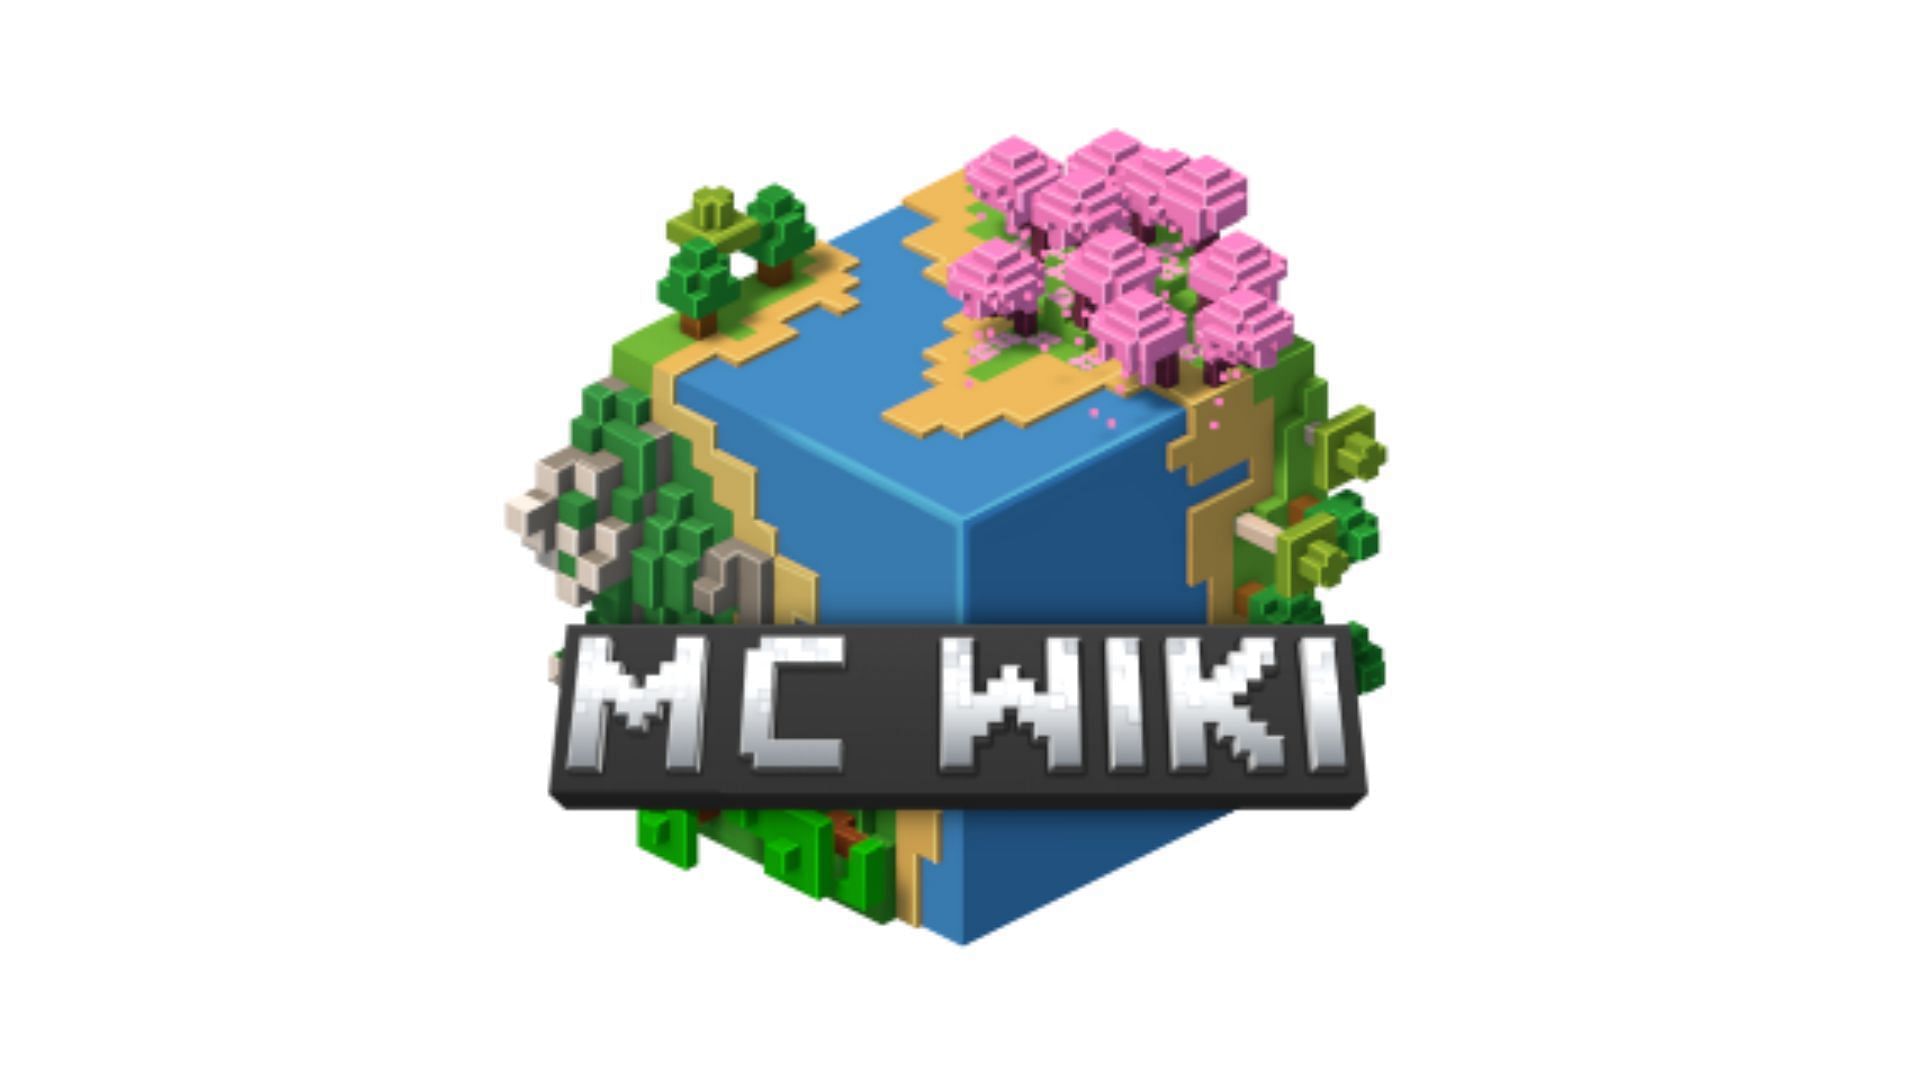 Minecraft - Wikipedia